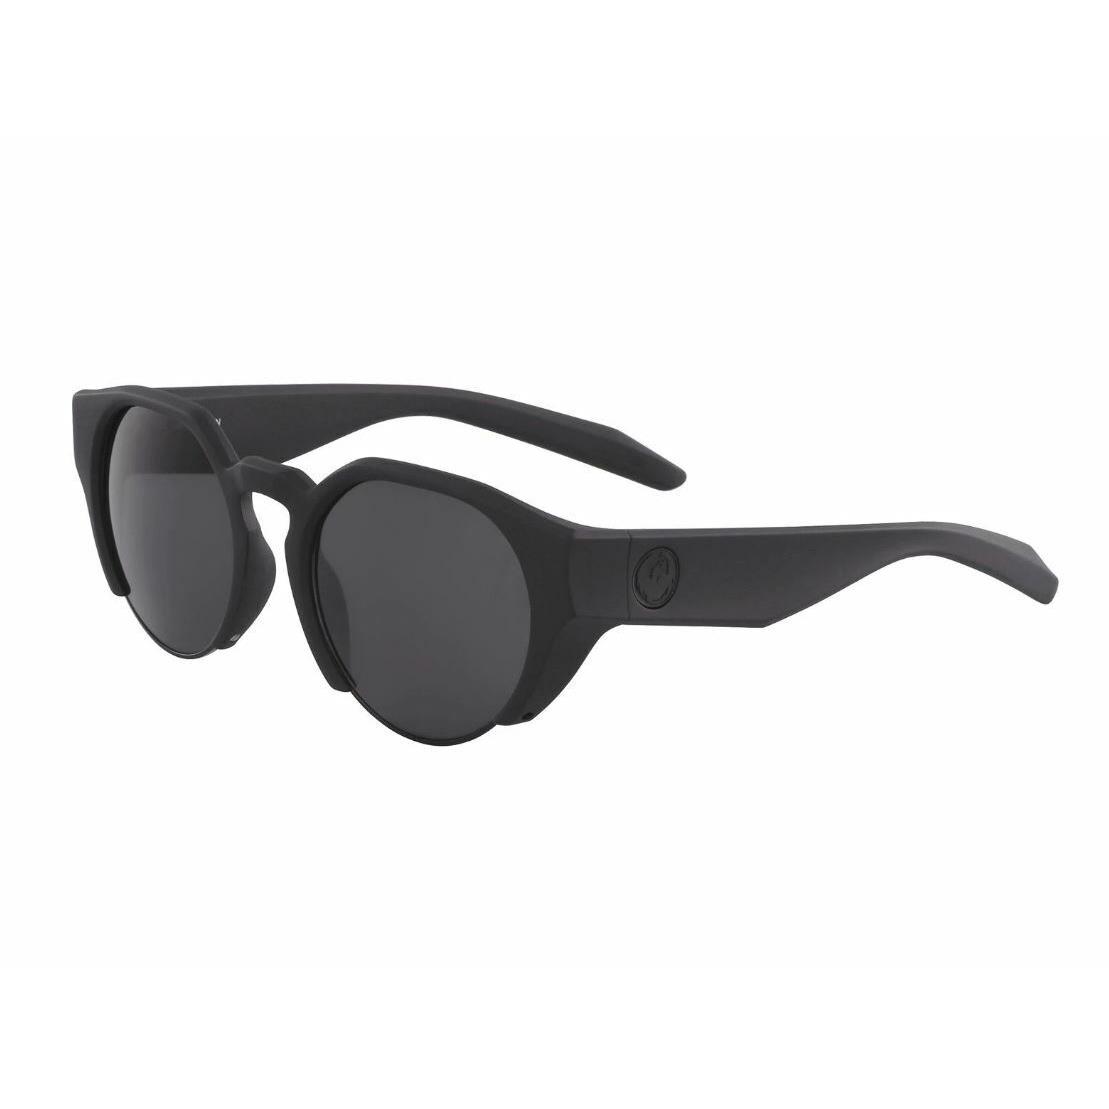 Dragon Compass Sunglasses Matte Black/ Grey UV Protection